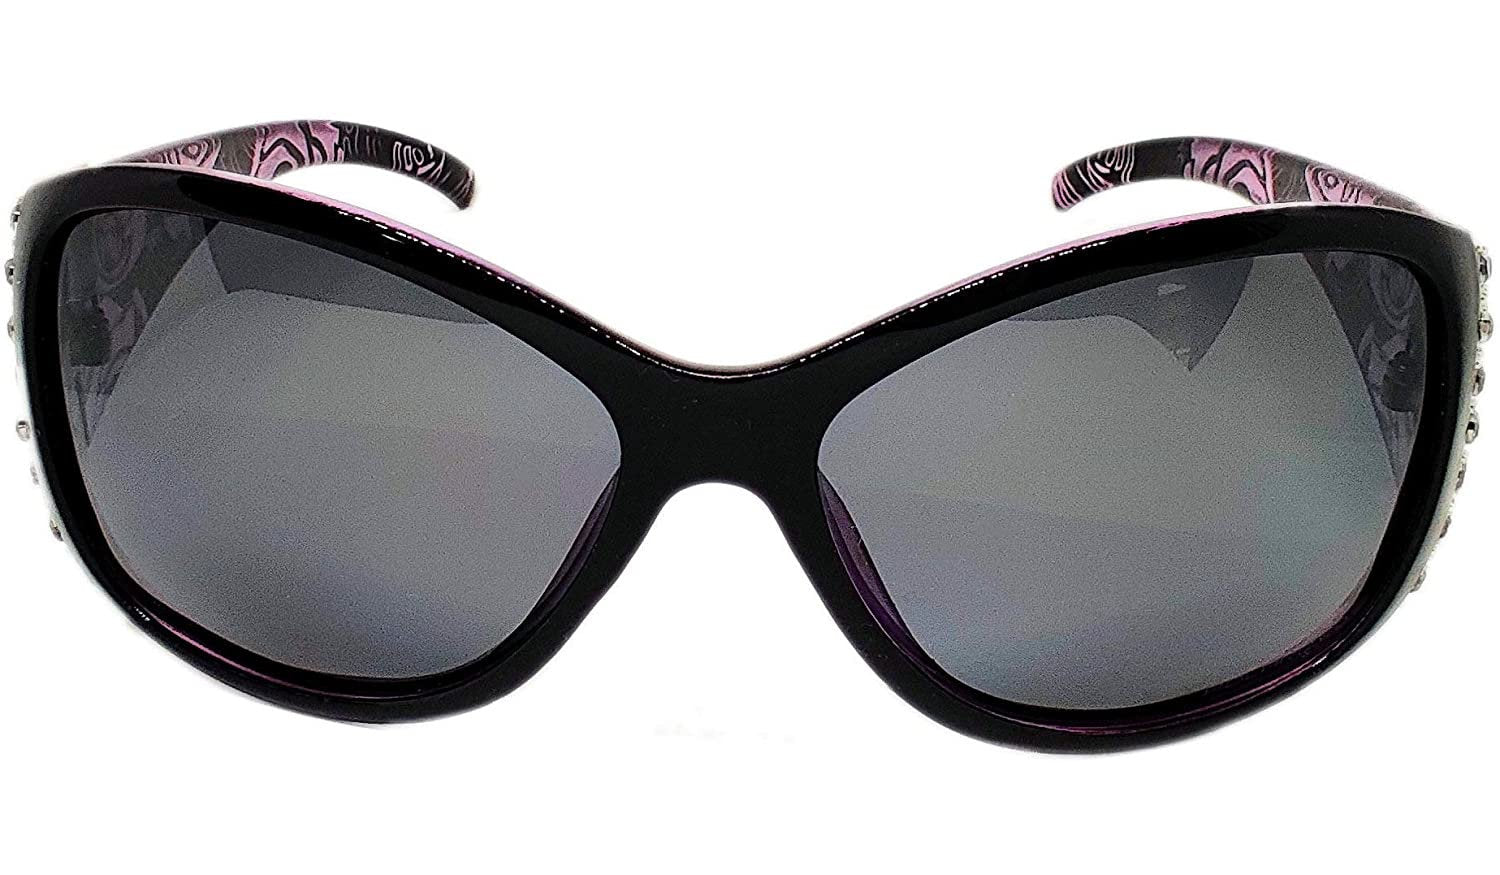  Polarized Sunglasses for Women - Premium Fashion